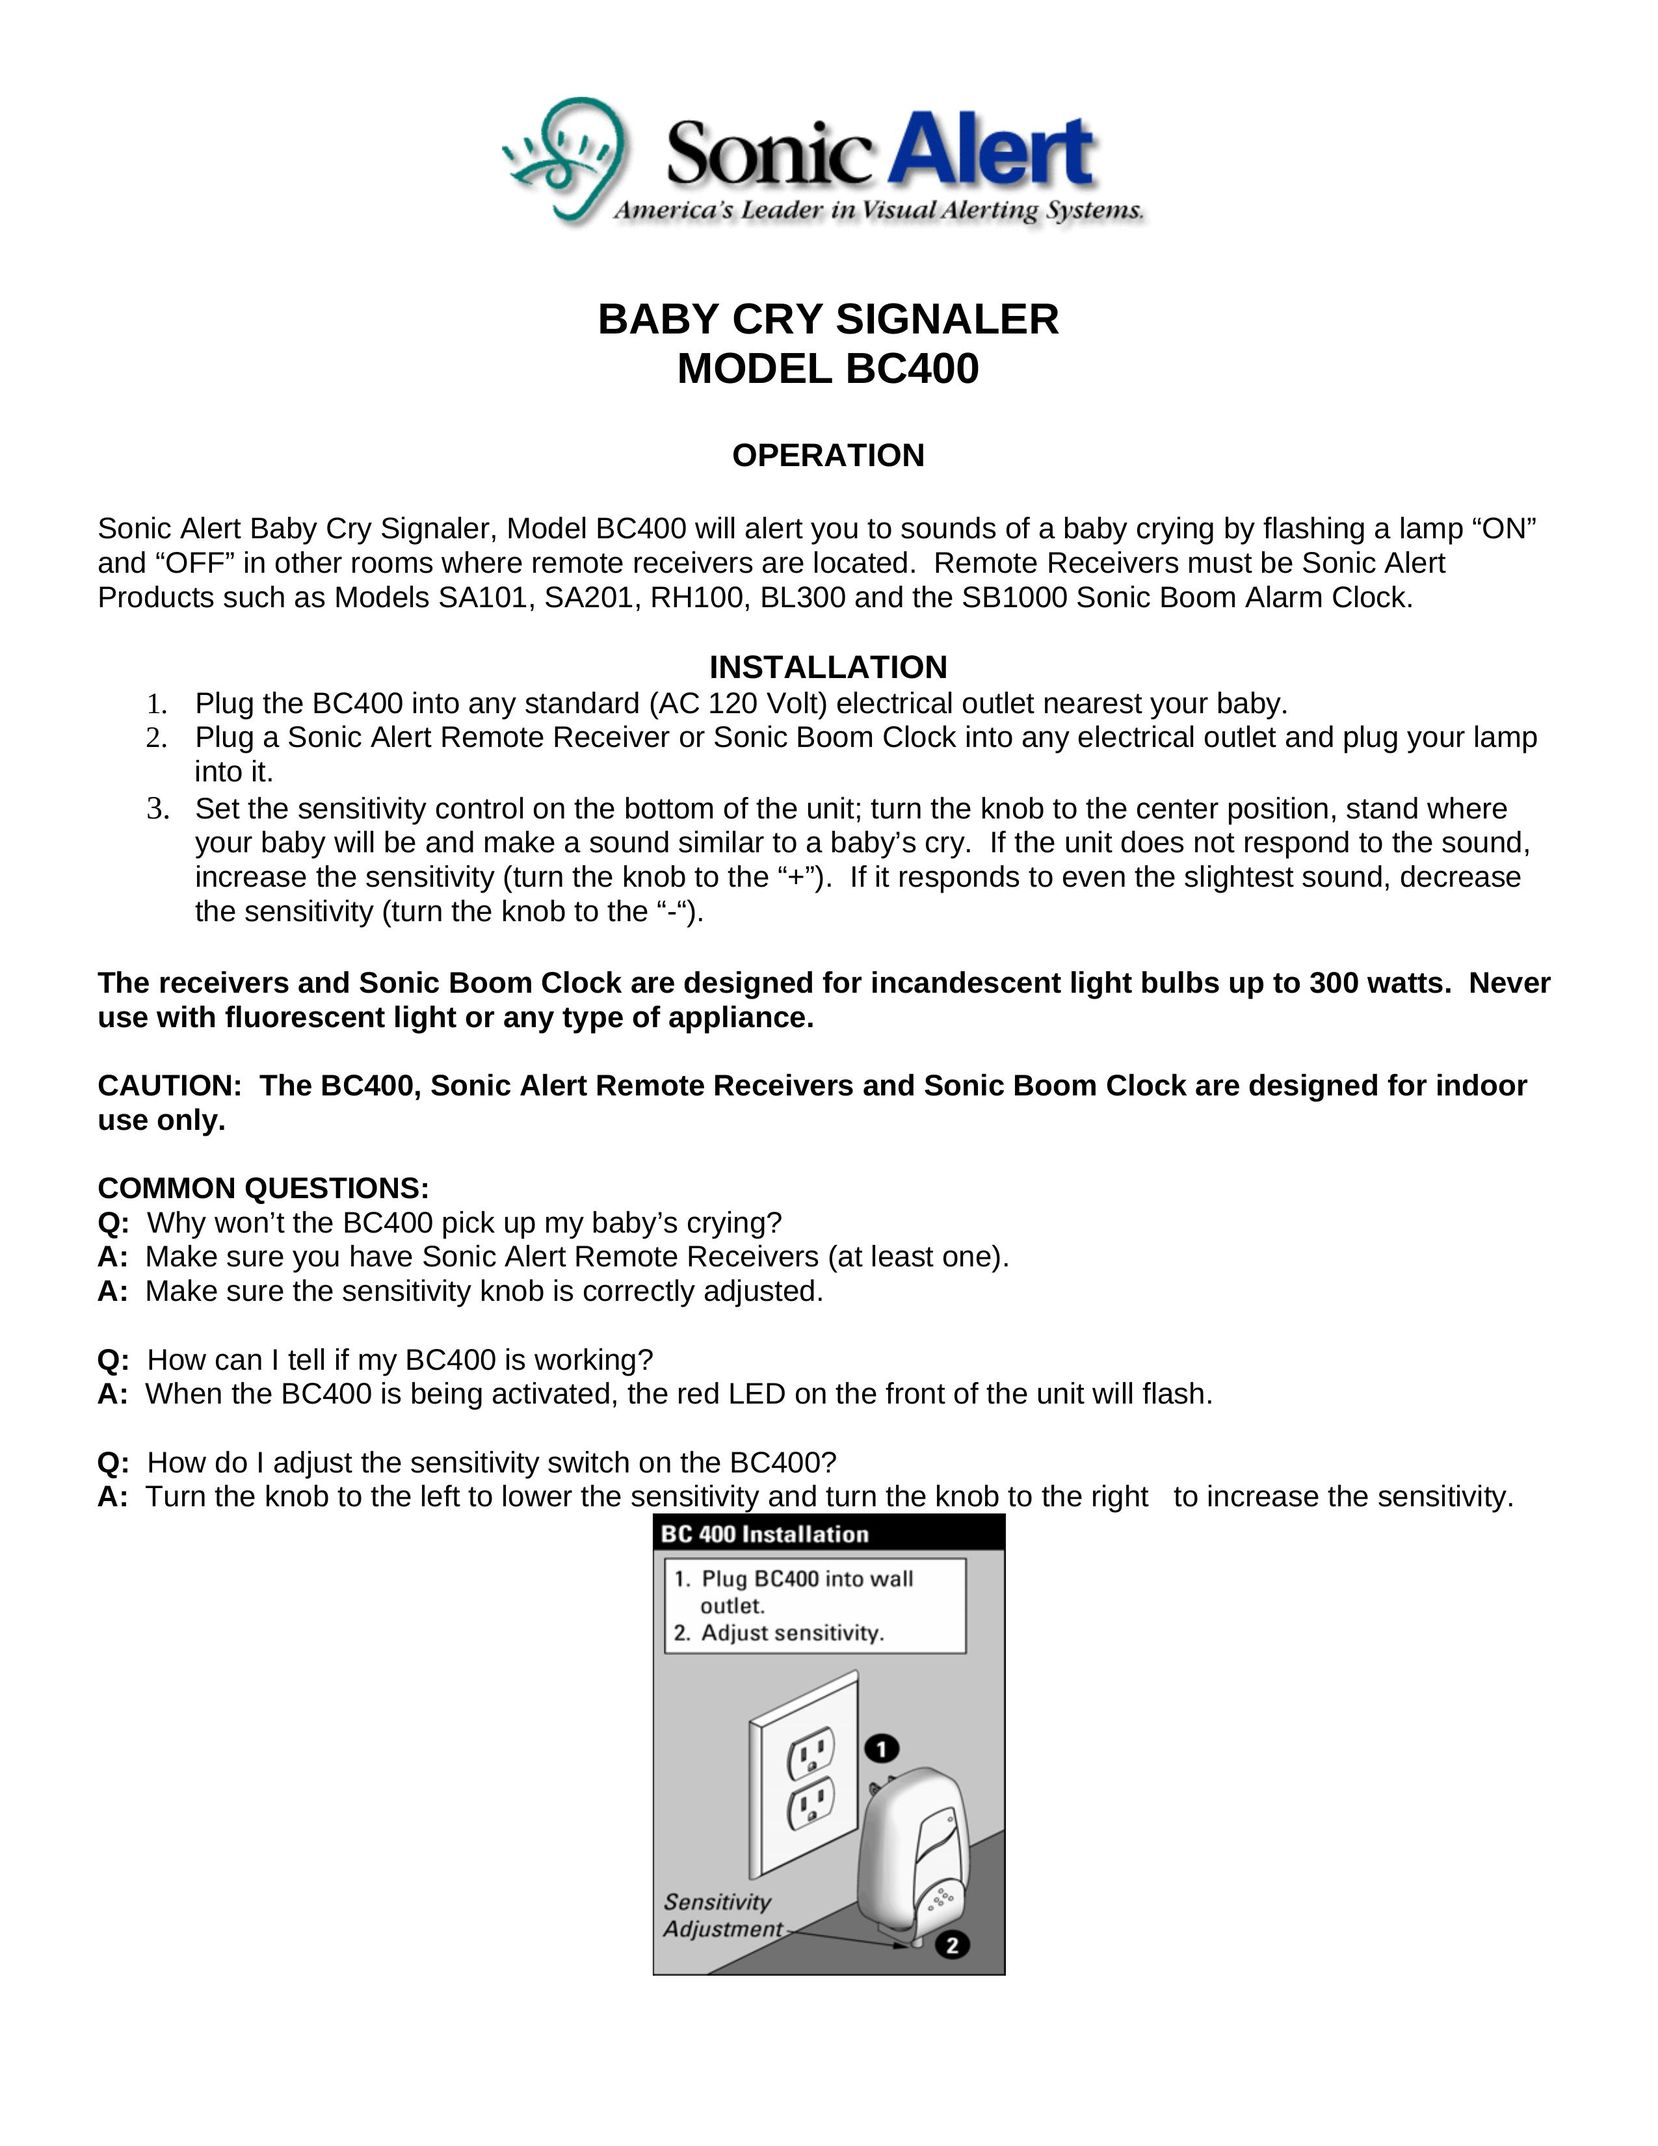 Sonic Alert SA101 Baby Monitor User Manual